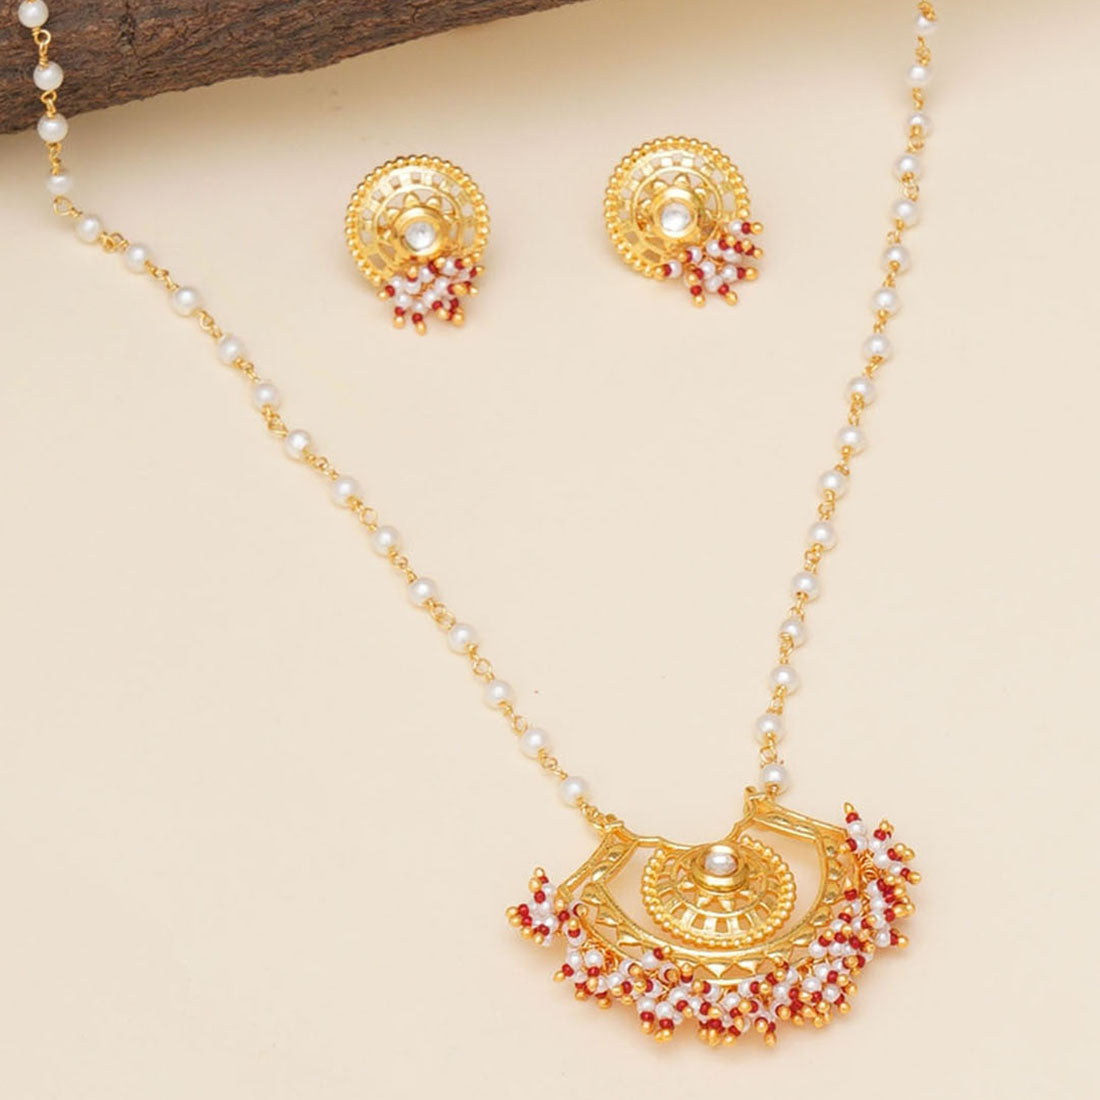 Exquisite Jadau Kundan Nagas Long Gold Necklace - Antique Jewelry  Collection Online NL26107